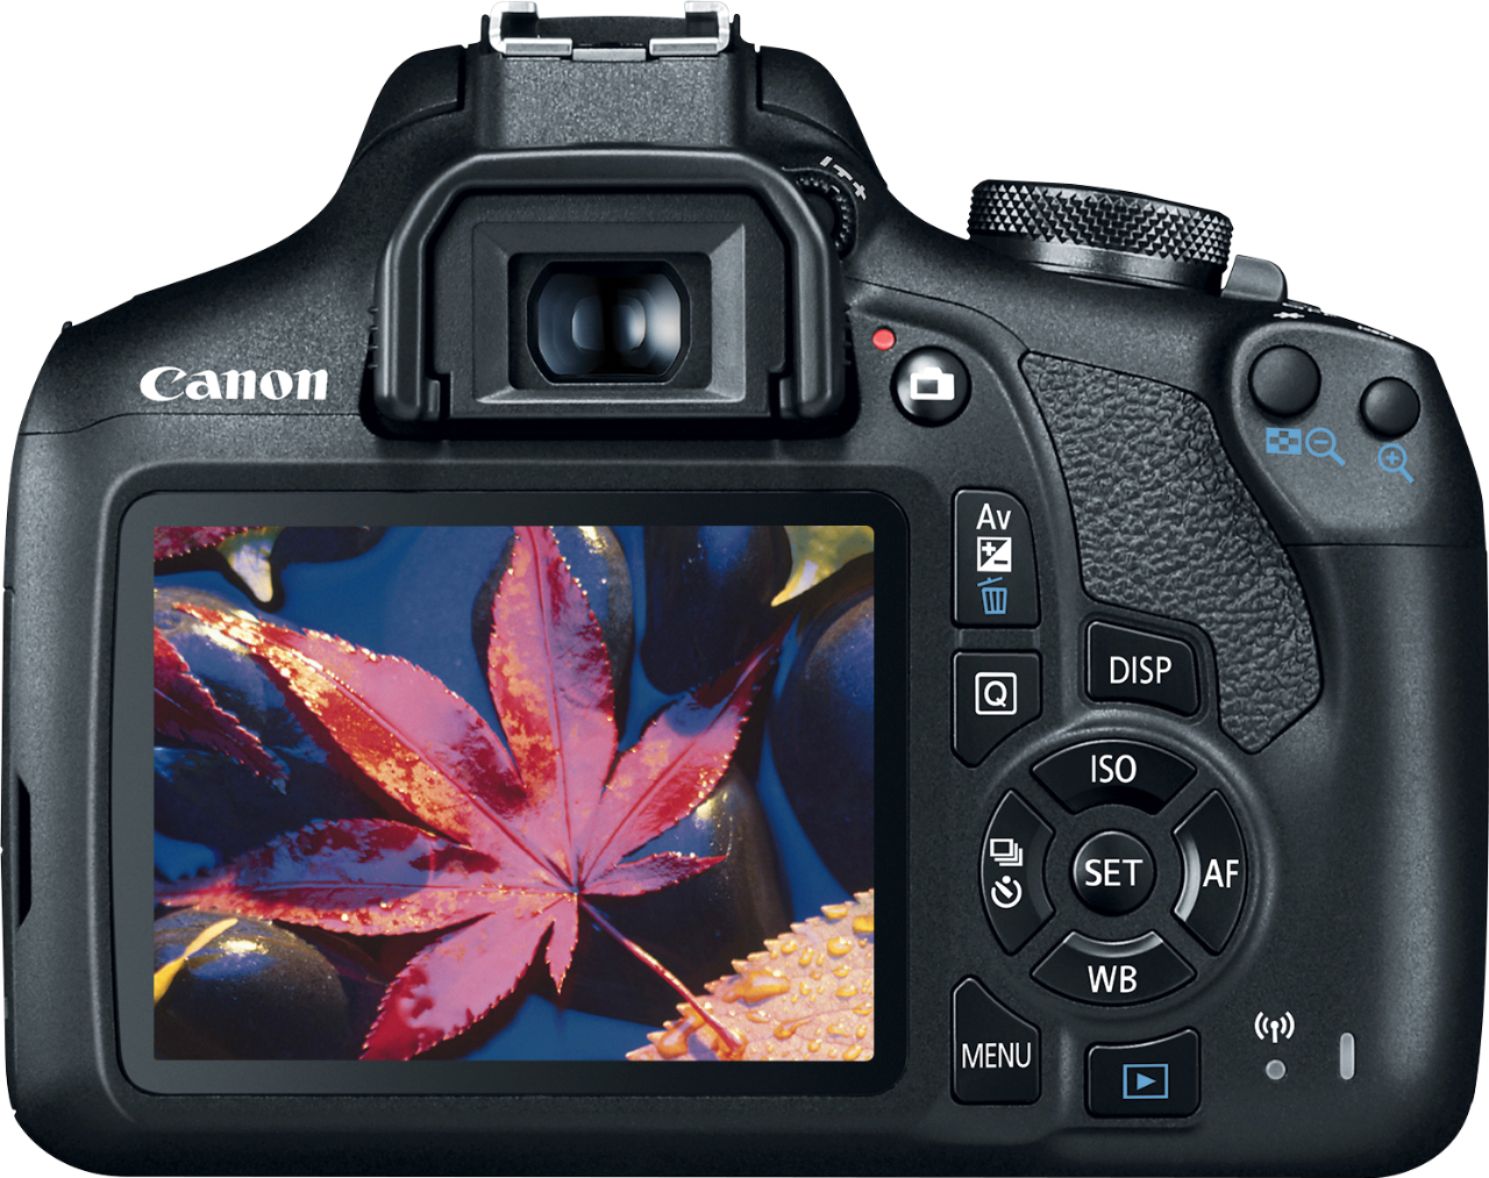 Aspire pulse the waiter Canon EOS Rebel T7 DSLR Video Camera with 18-55mm Lens Black 2727C002 -  Best Buy